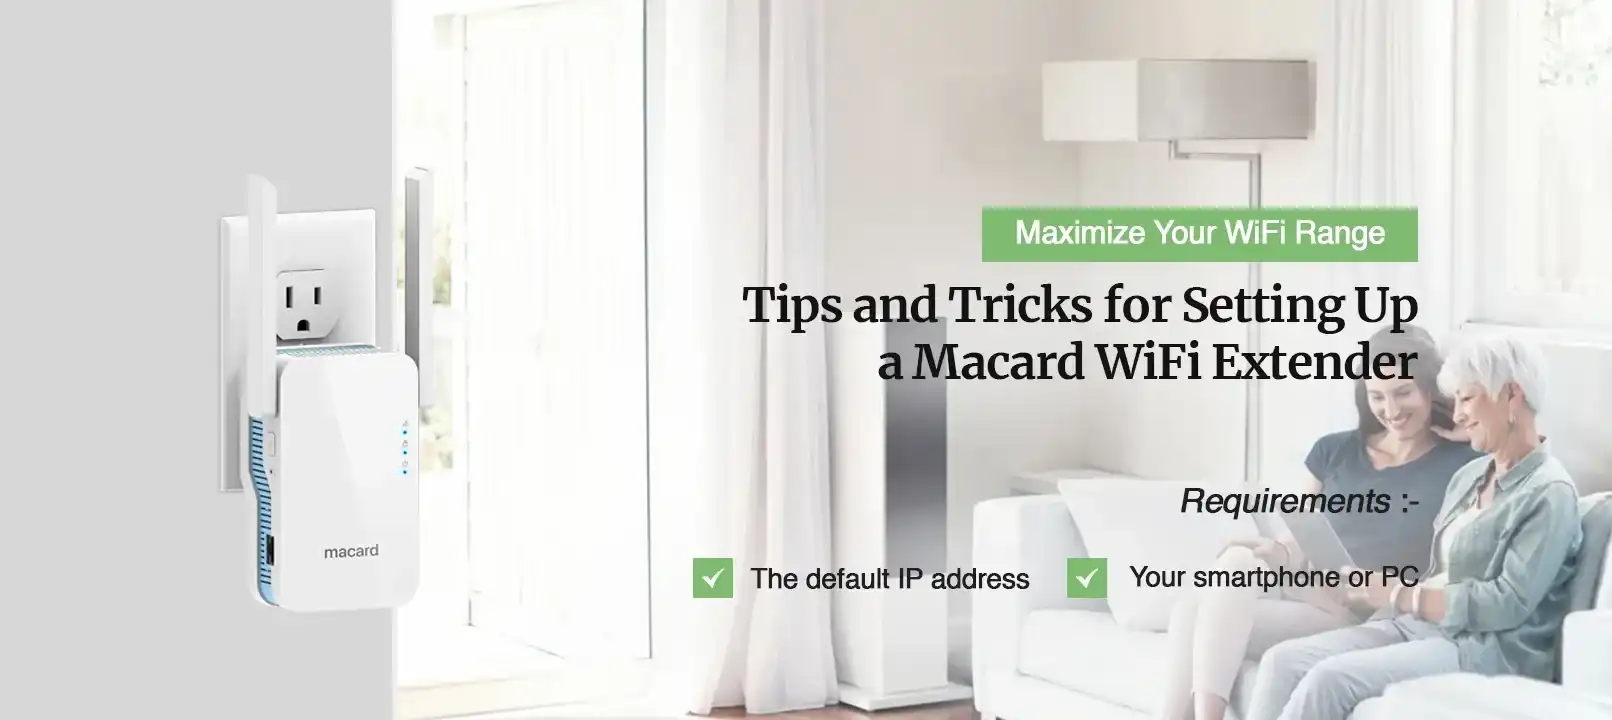 How to Setup Macard WiFi Extender